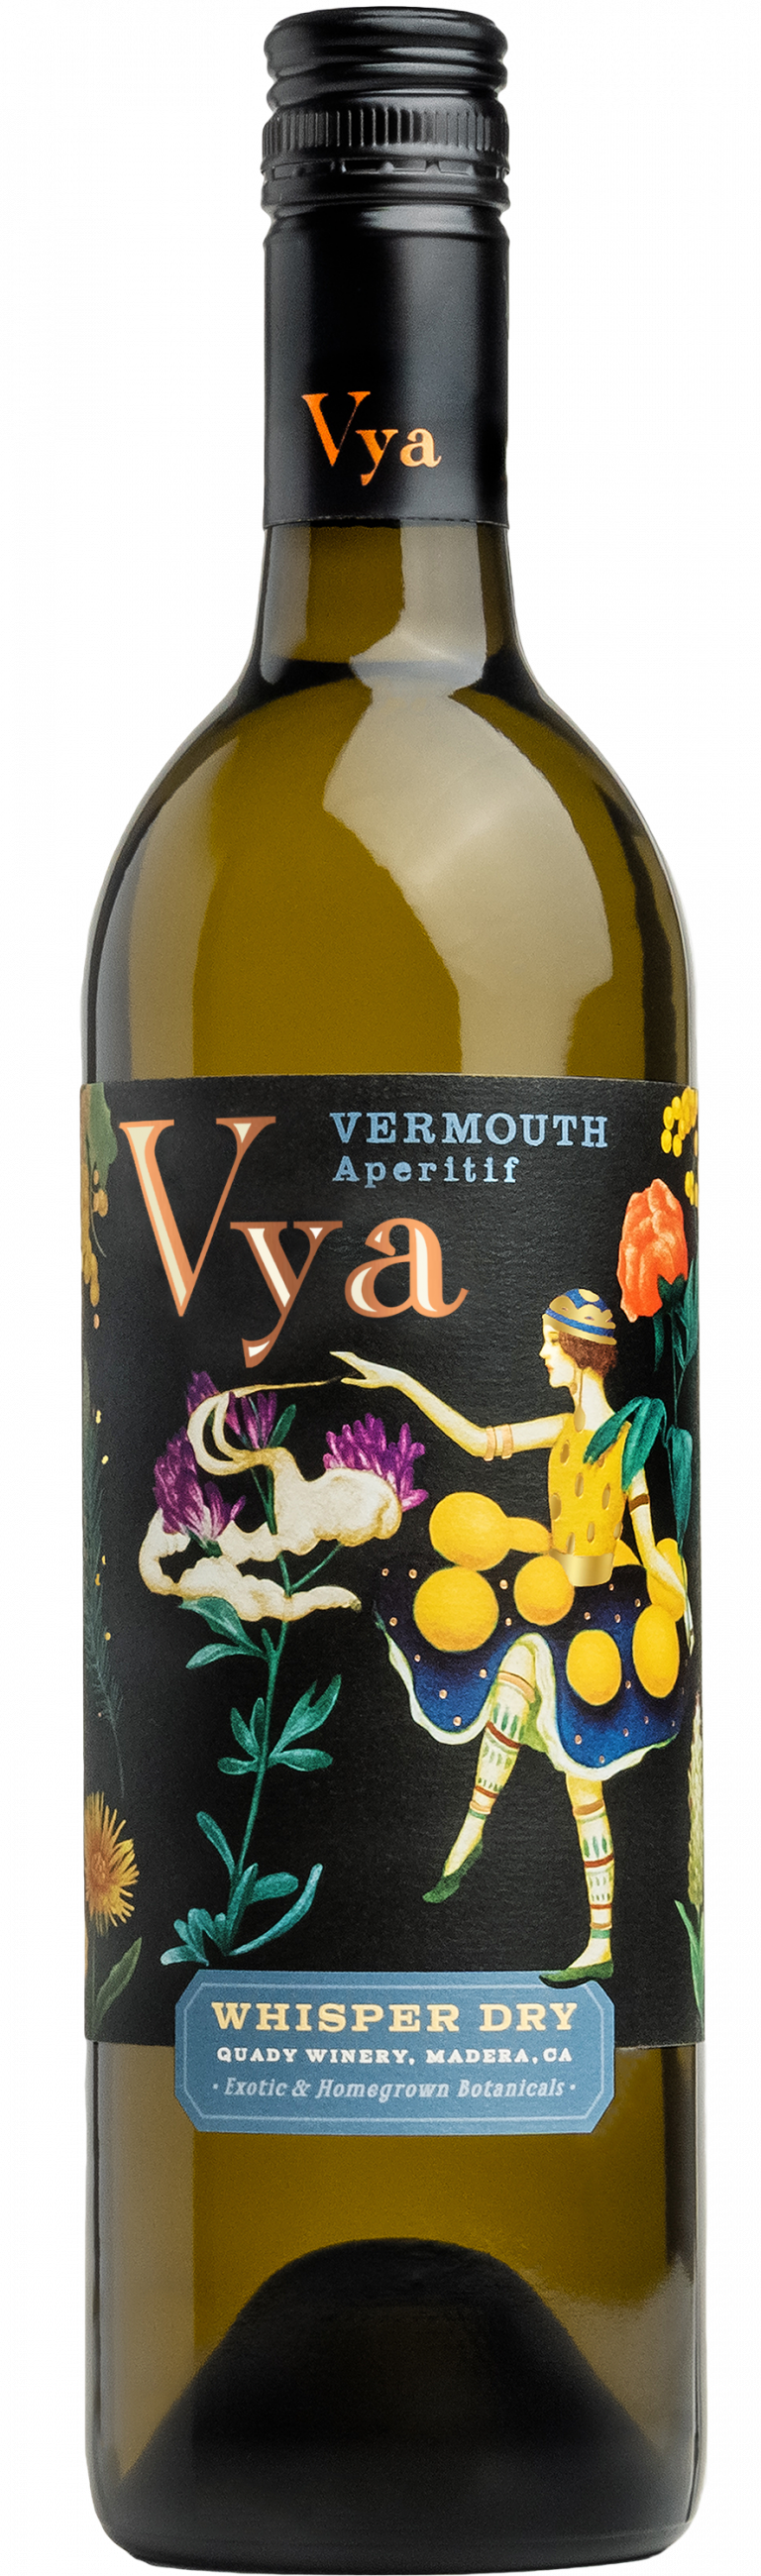 Vya Whisper Dry Vermouth bottle